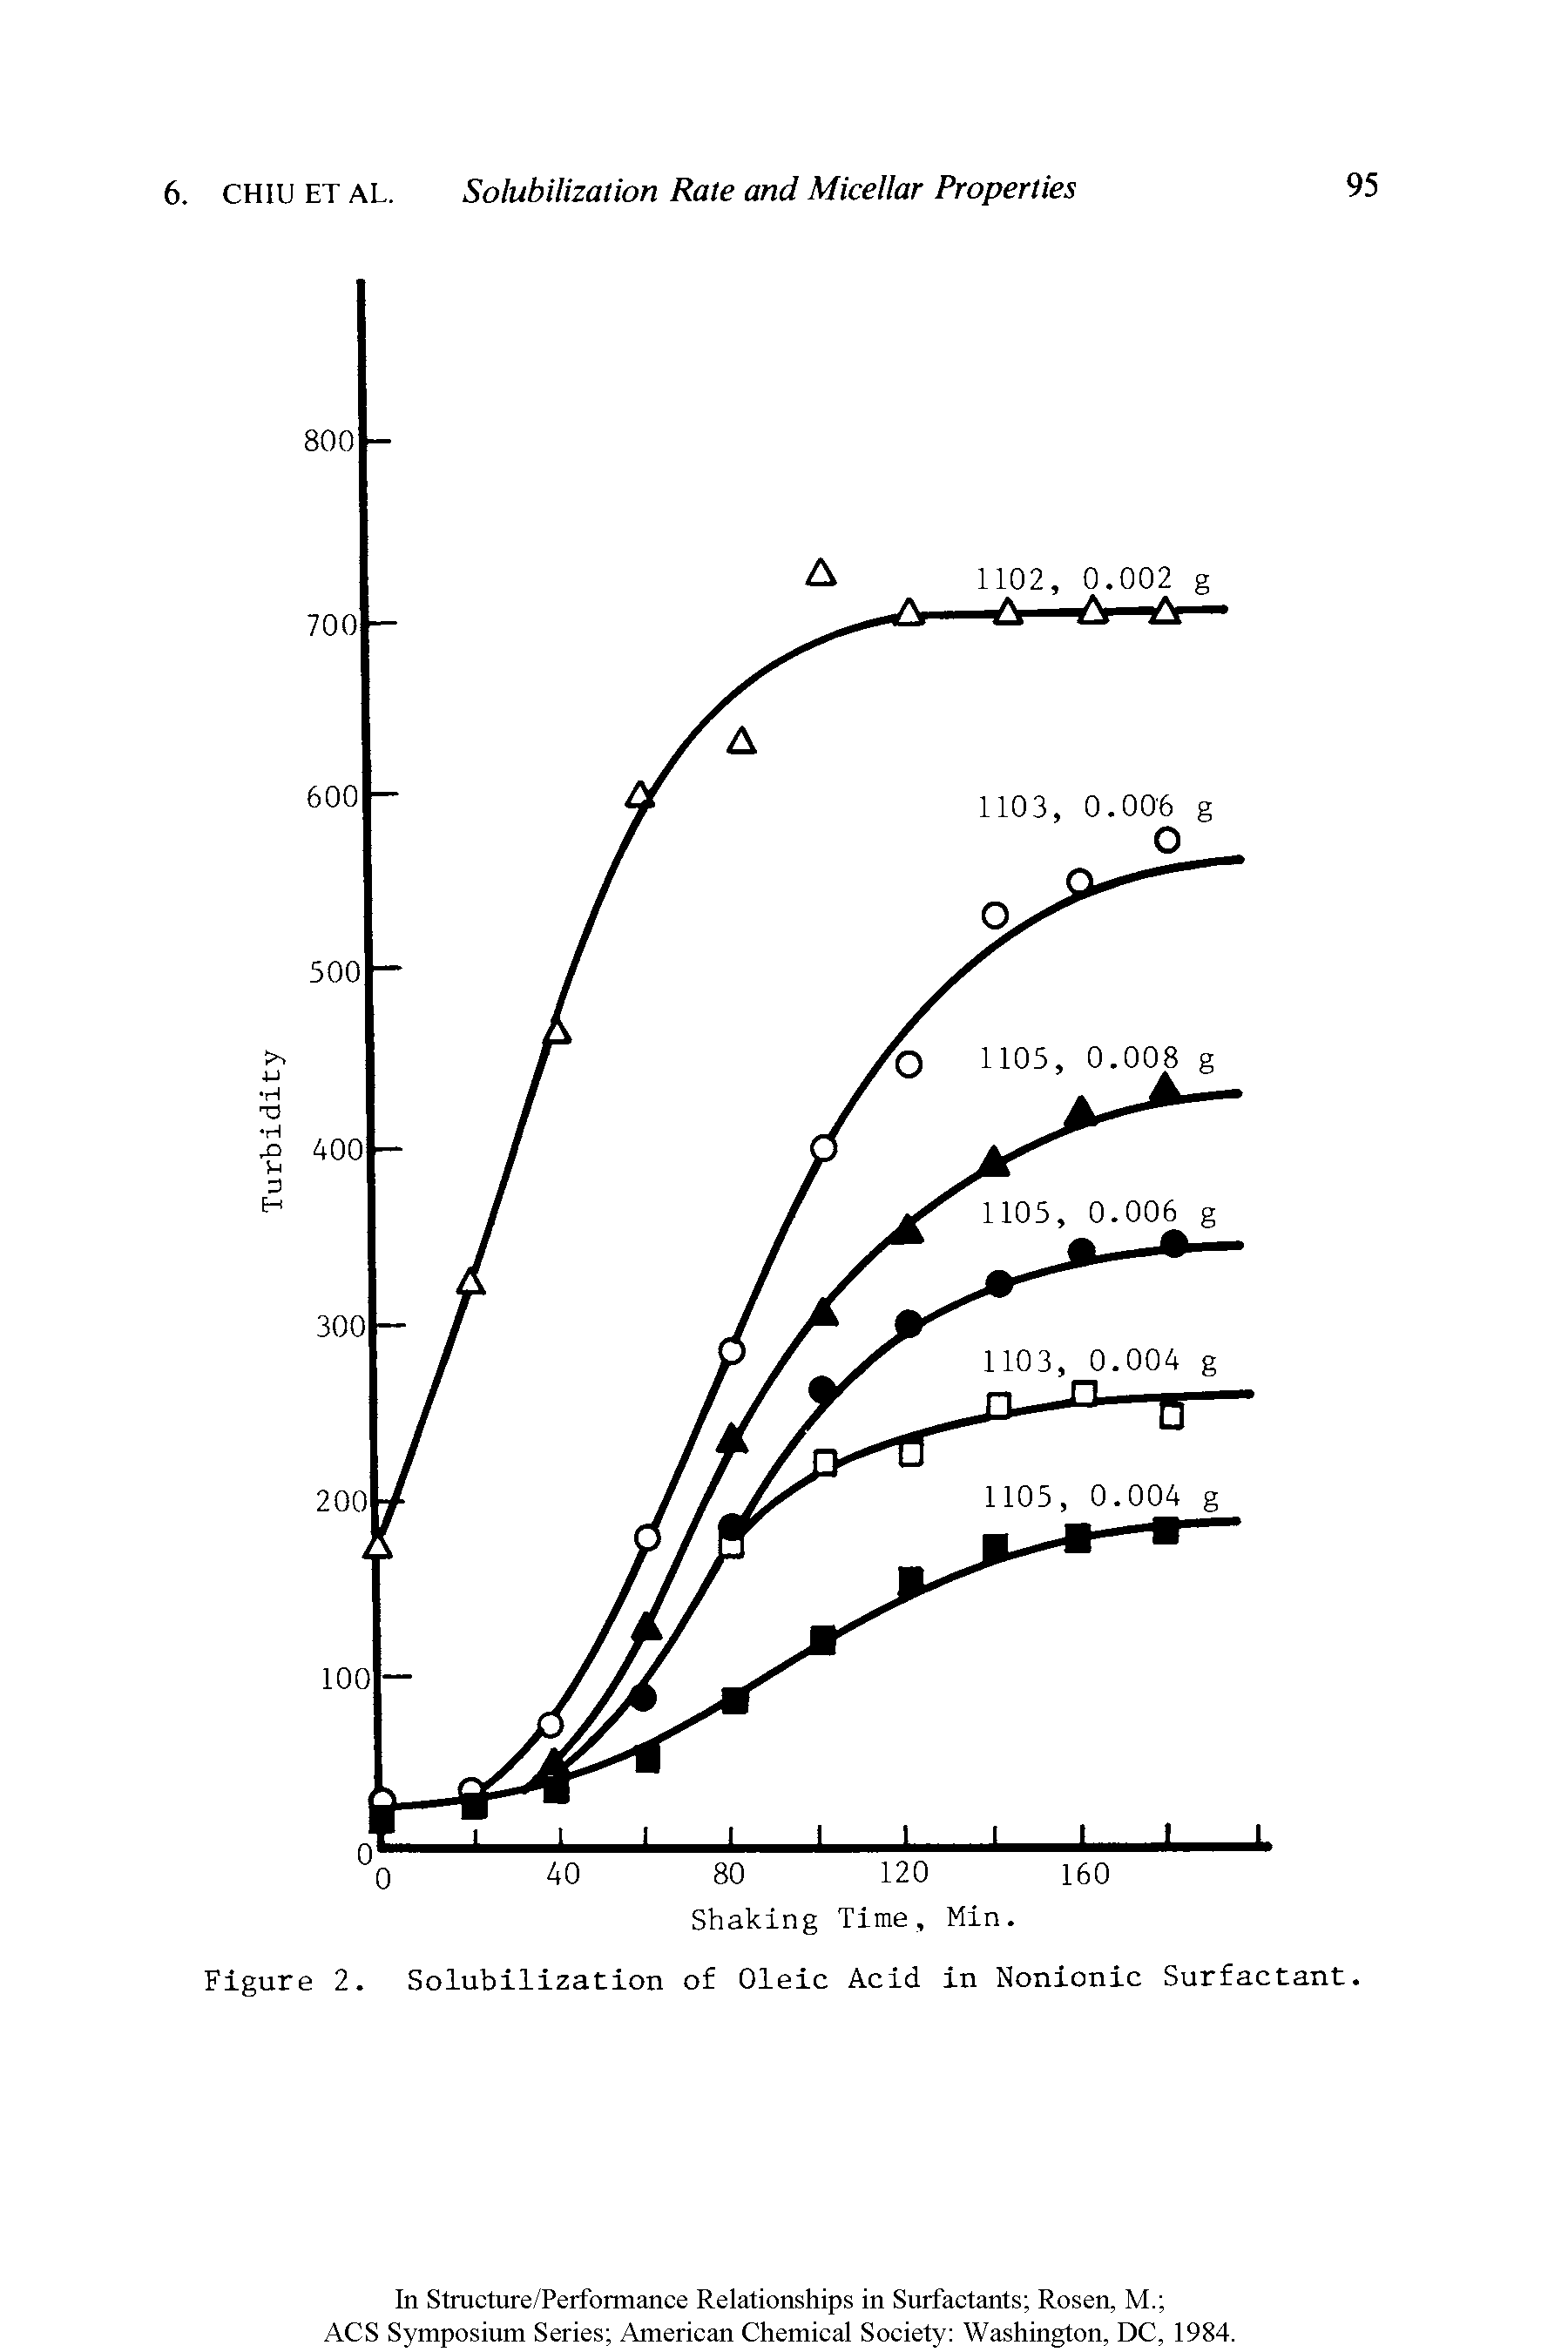 Figure 2. Solubilization of Oleic Acid in Nonionic Surfactant.